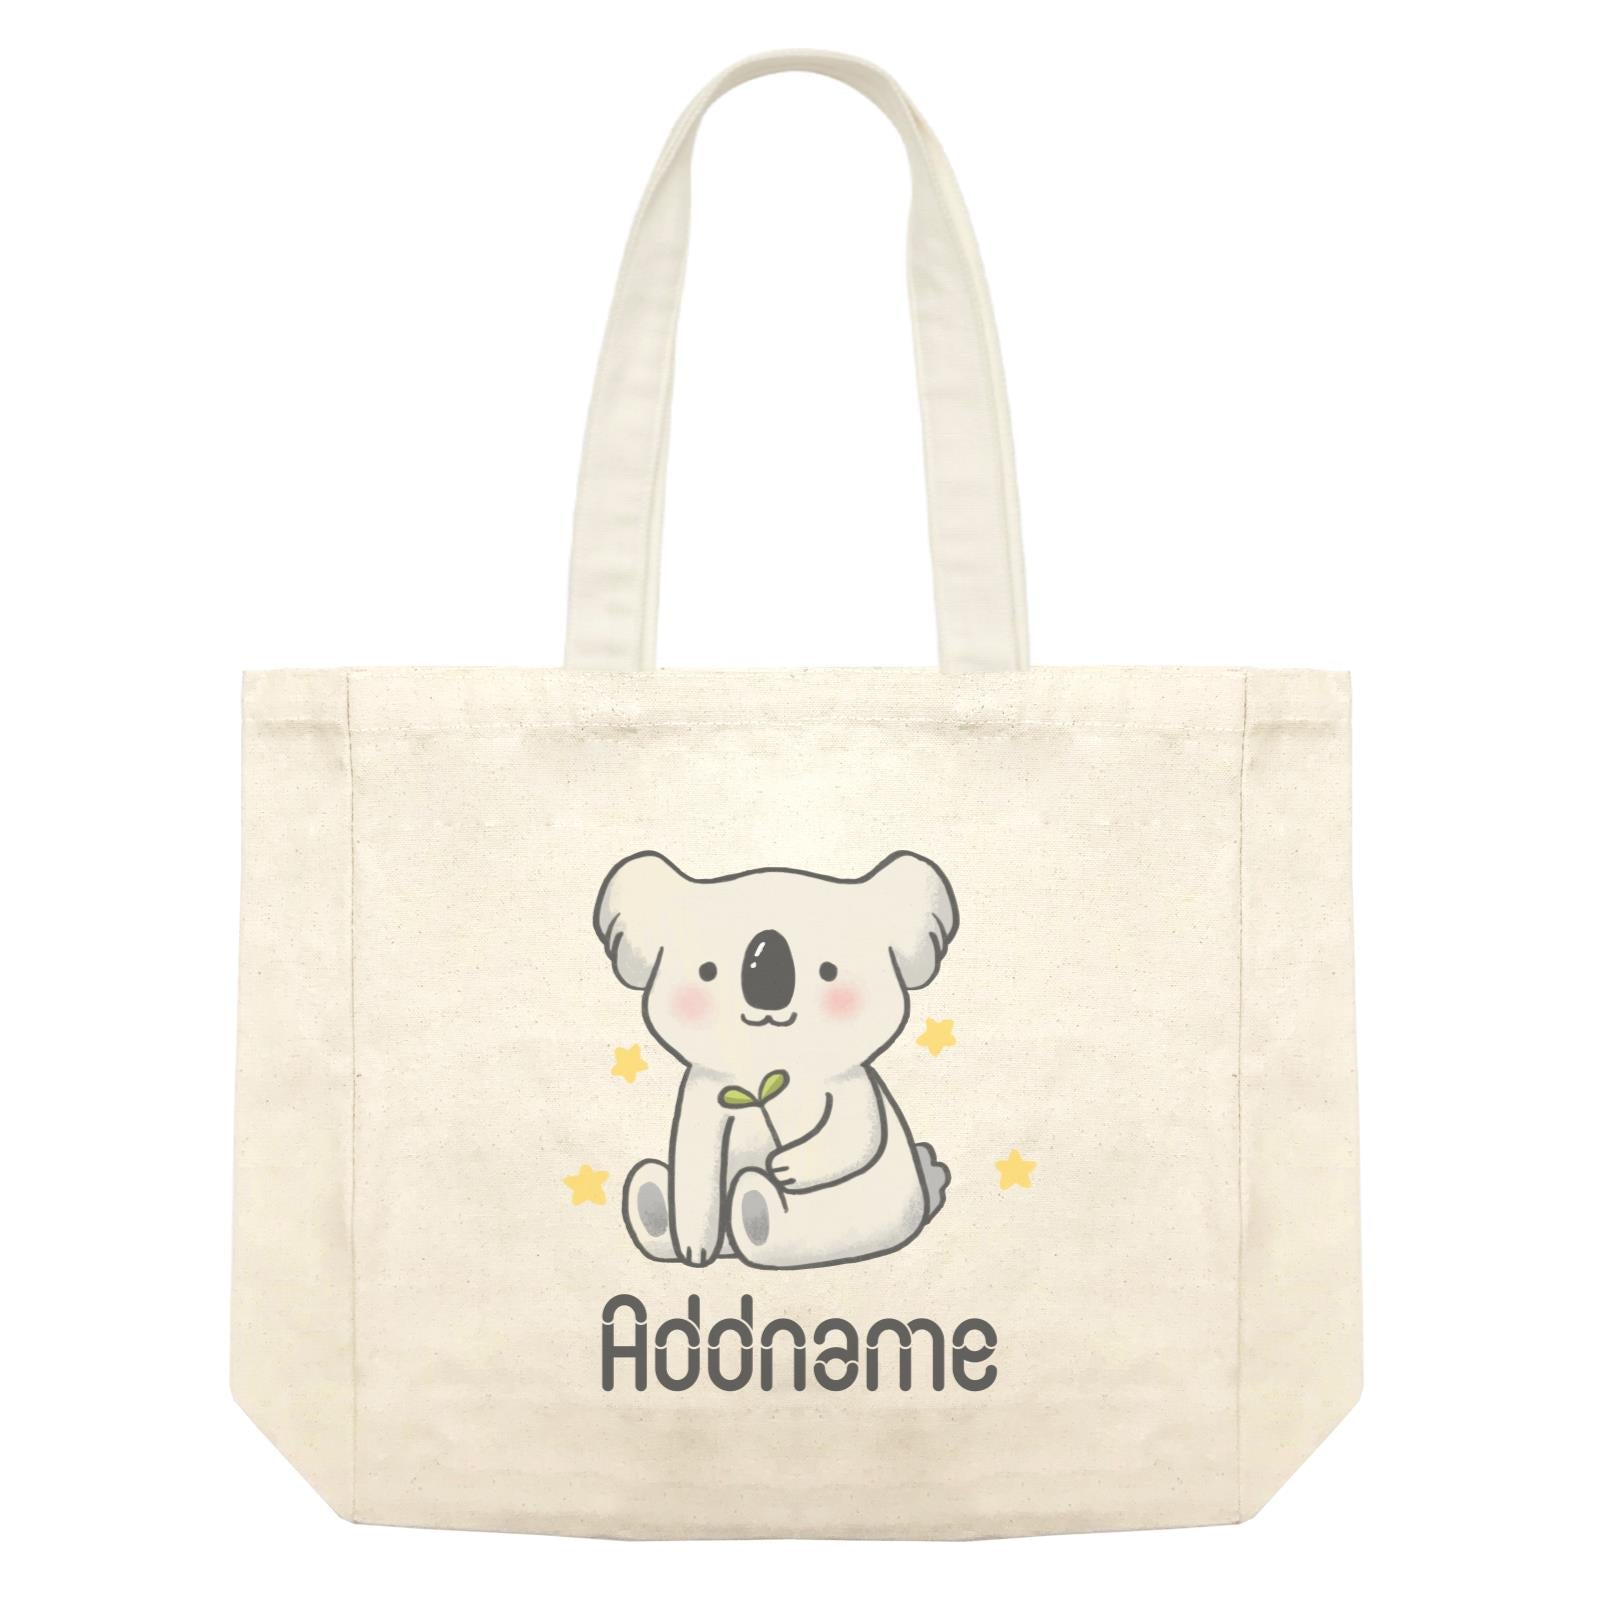 Cute Hand Drawn Style Koala Addname Shopping Bag